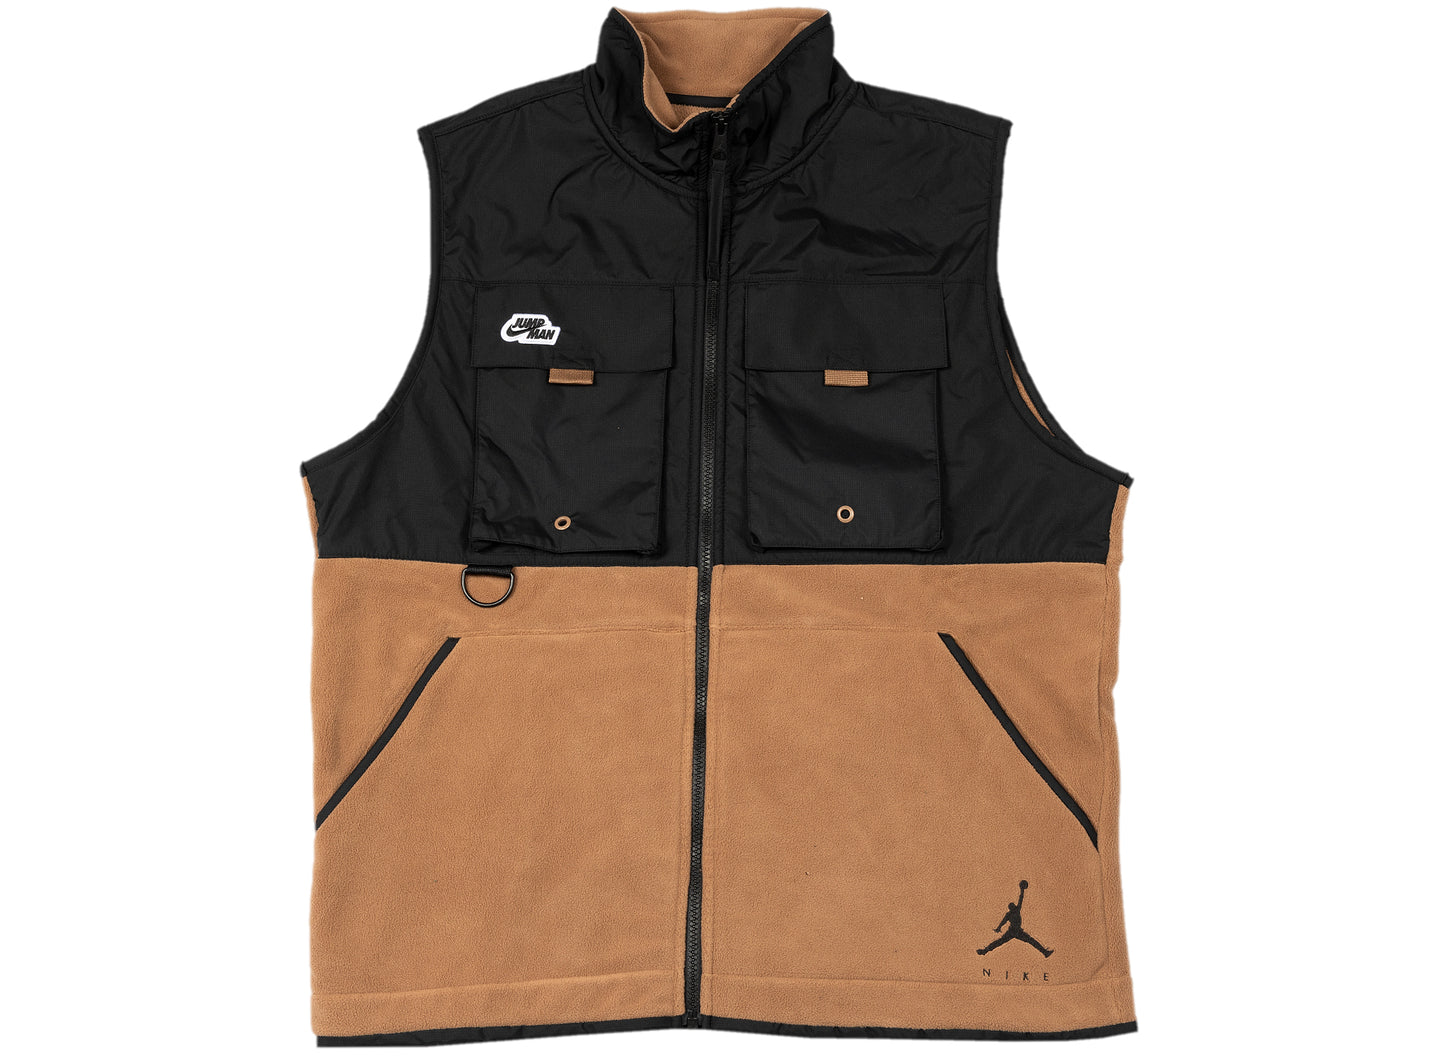 Jordan Jumpman Vest